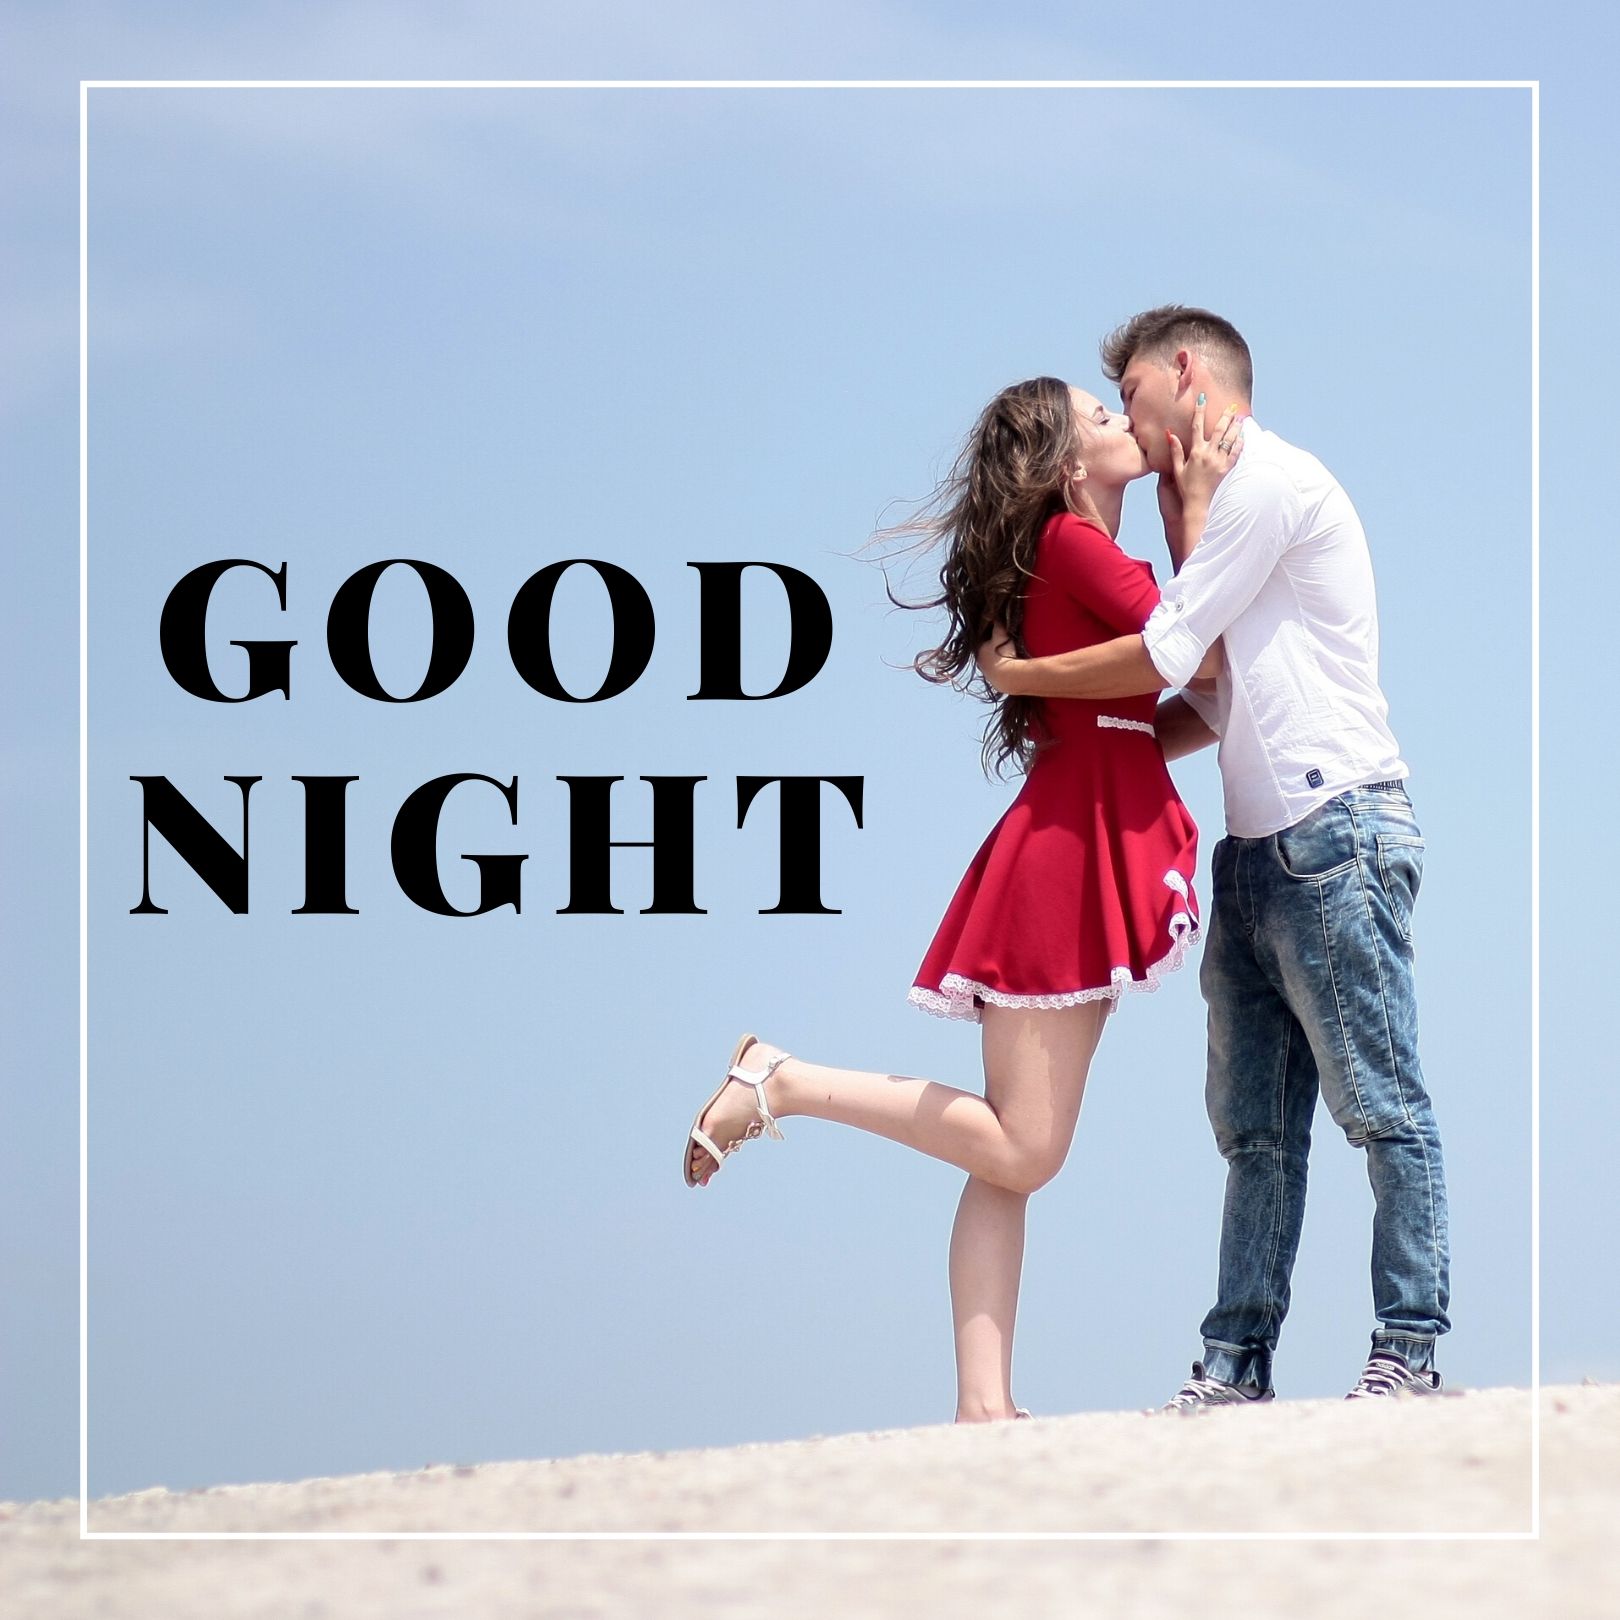 Good Night Kiss image